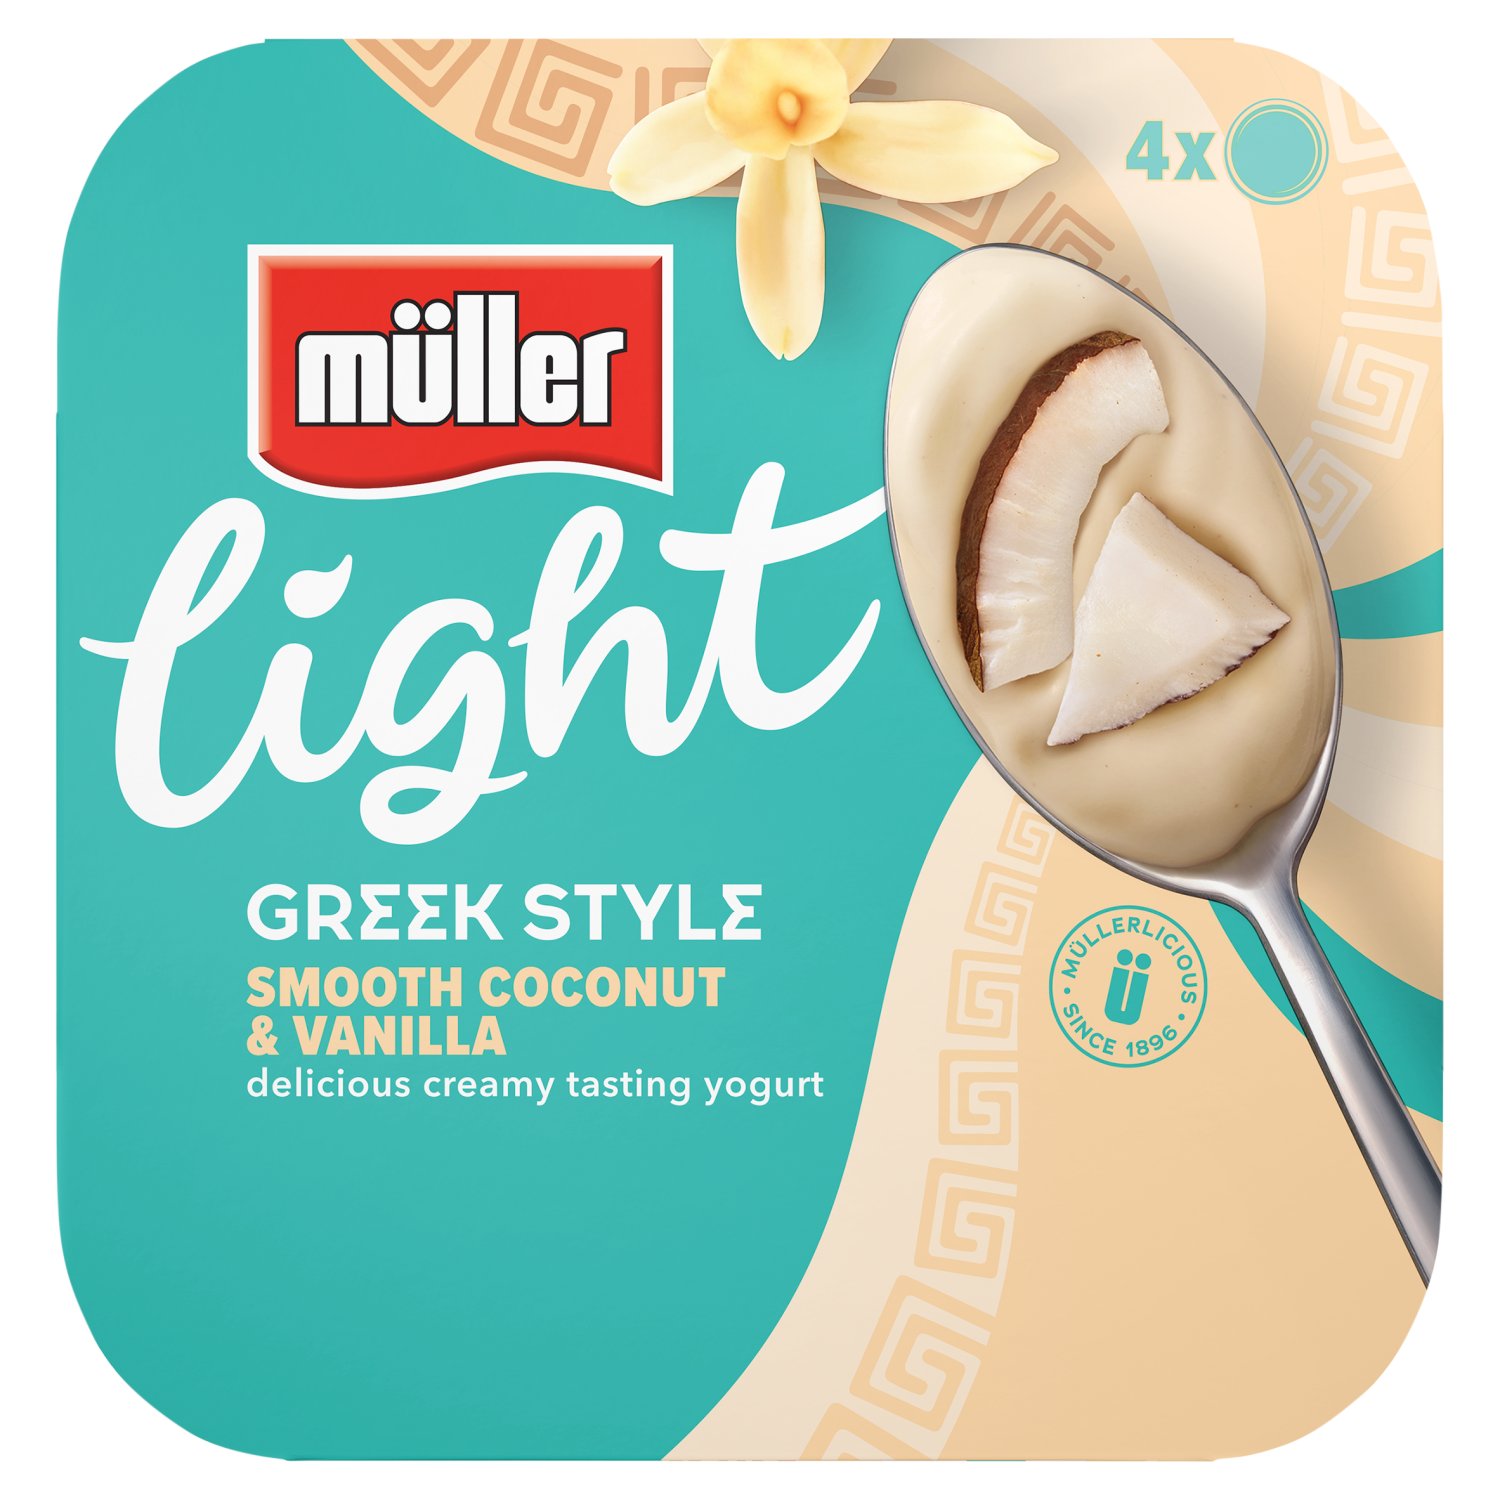 Muller Light Greek Style Coconut & Vanilla Yogurt 4 Pack (115 g)